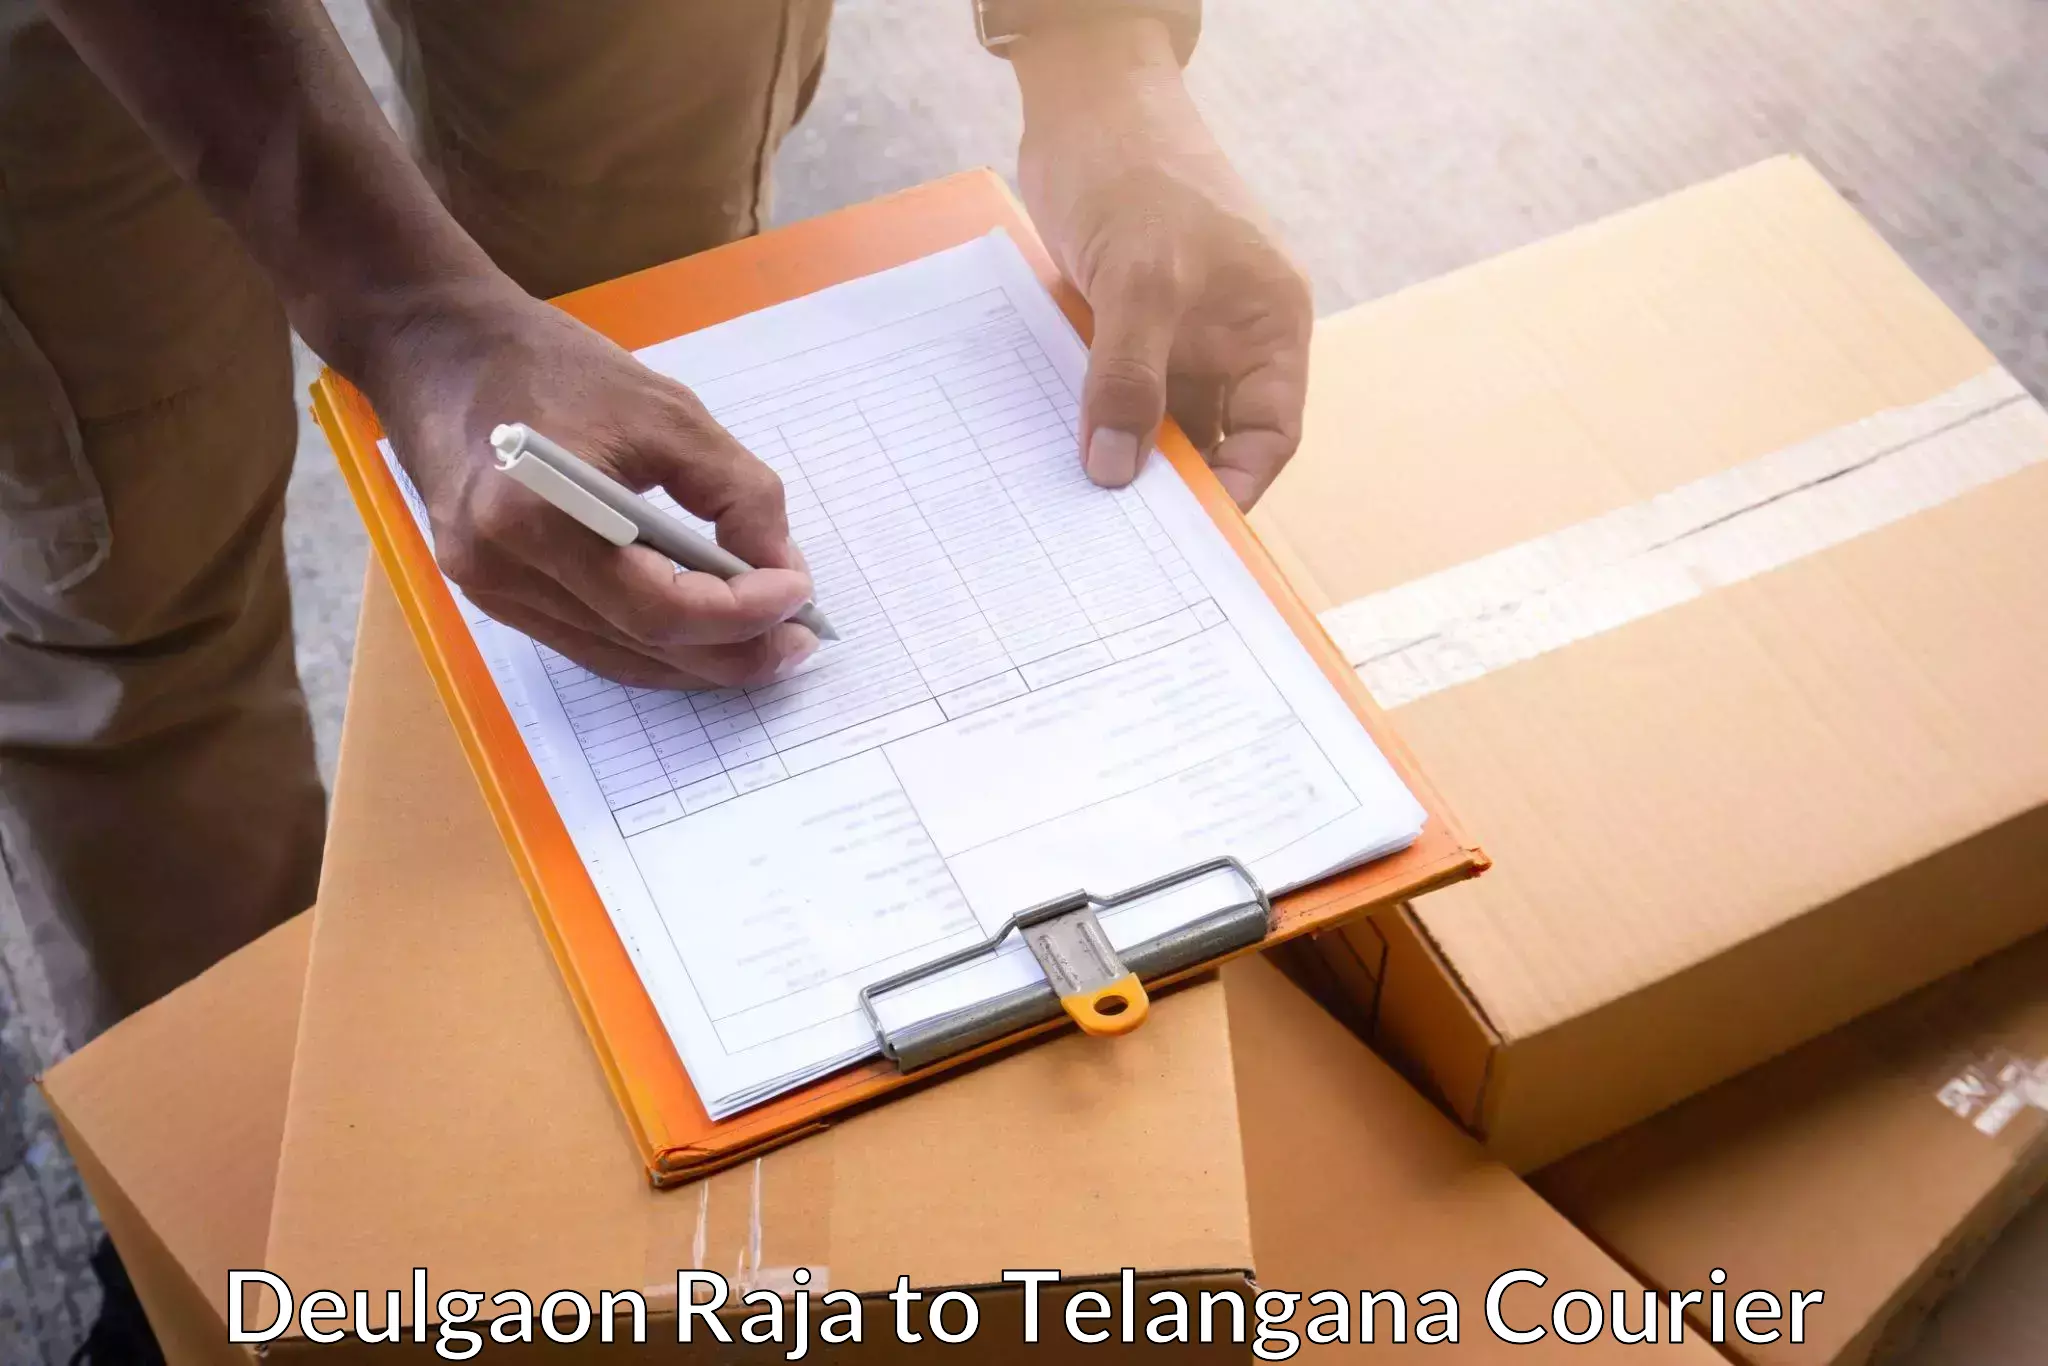 Bulk courier orders in Deulgaon Raja to Vikarabad